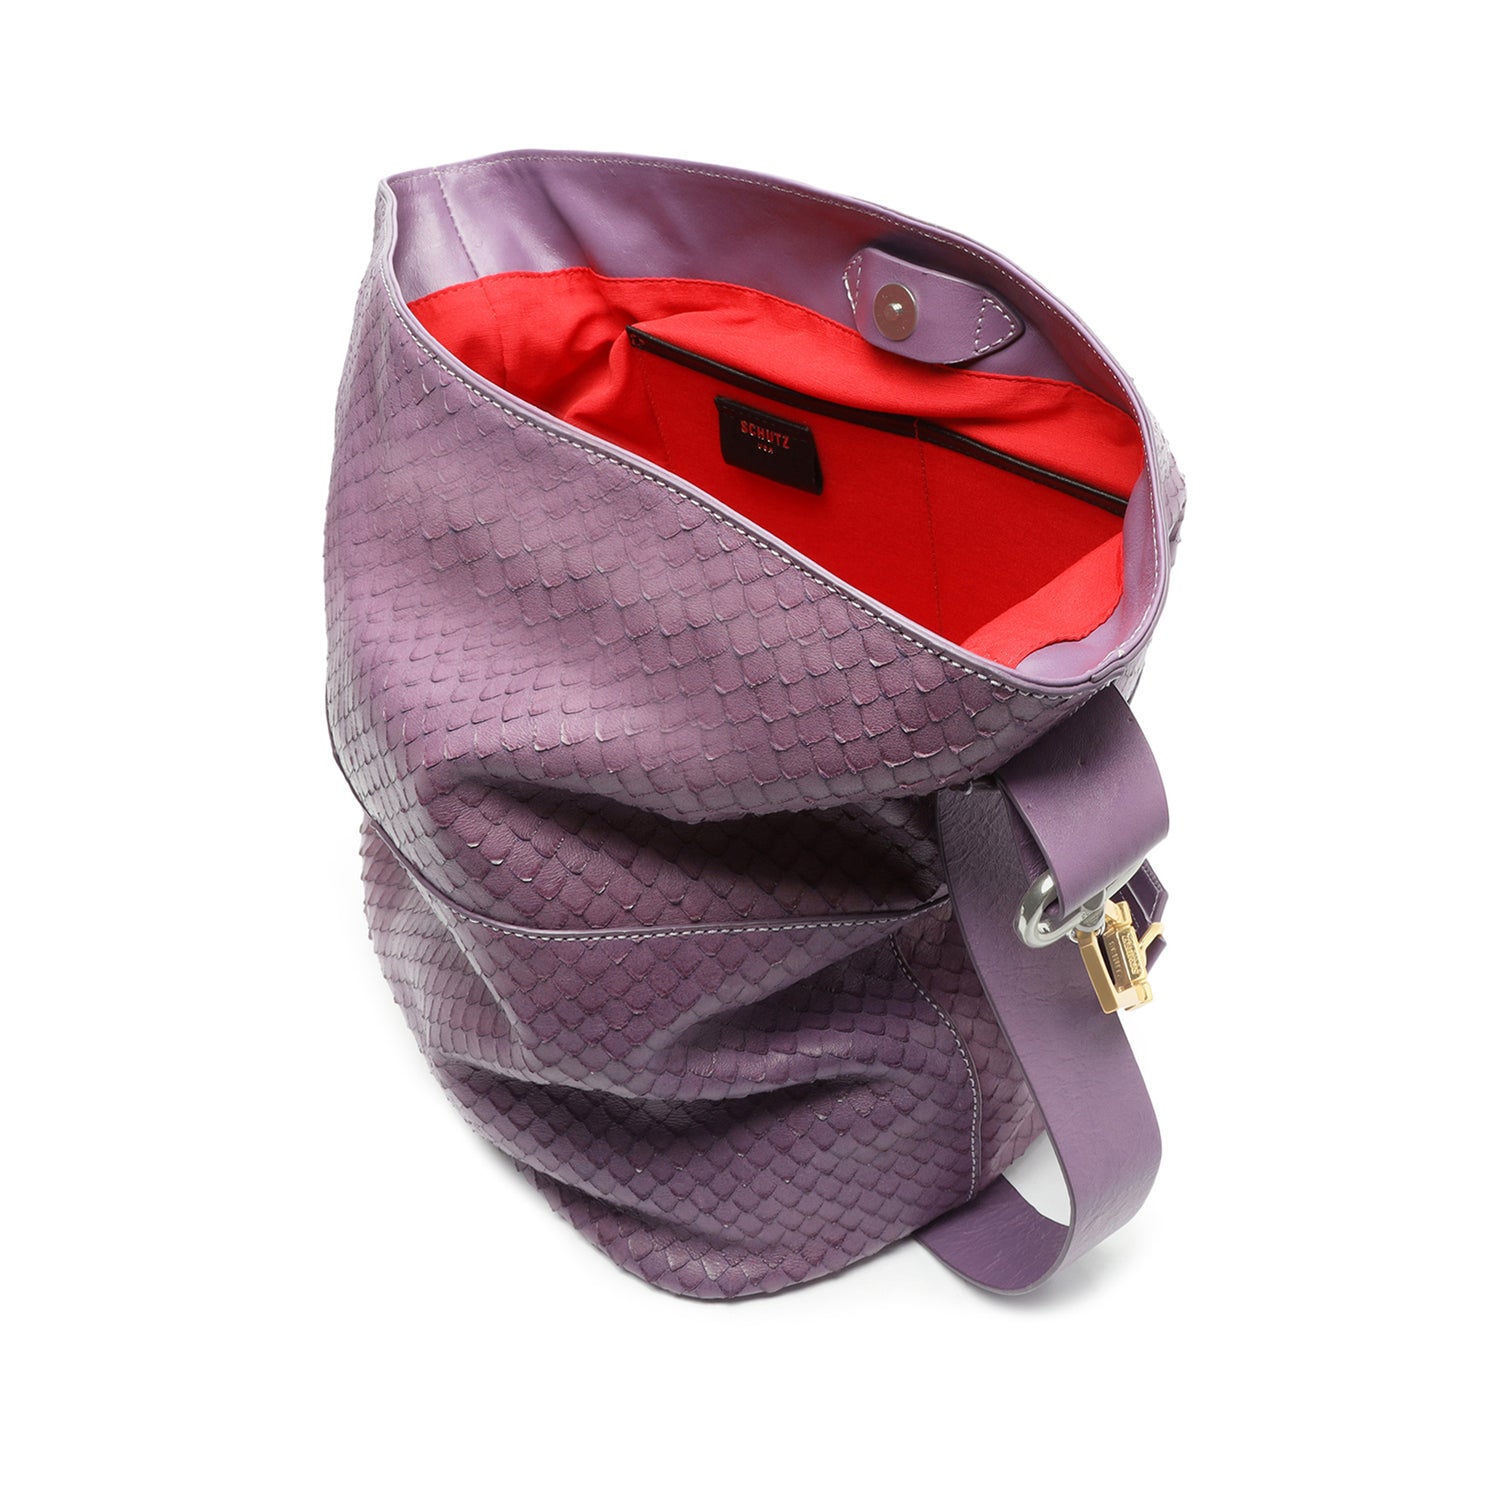 Mandy Snake-Embossed Leather Hobo Bag Handbags Sale    - Schutz Shoes